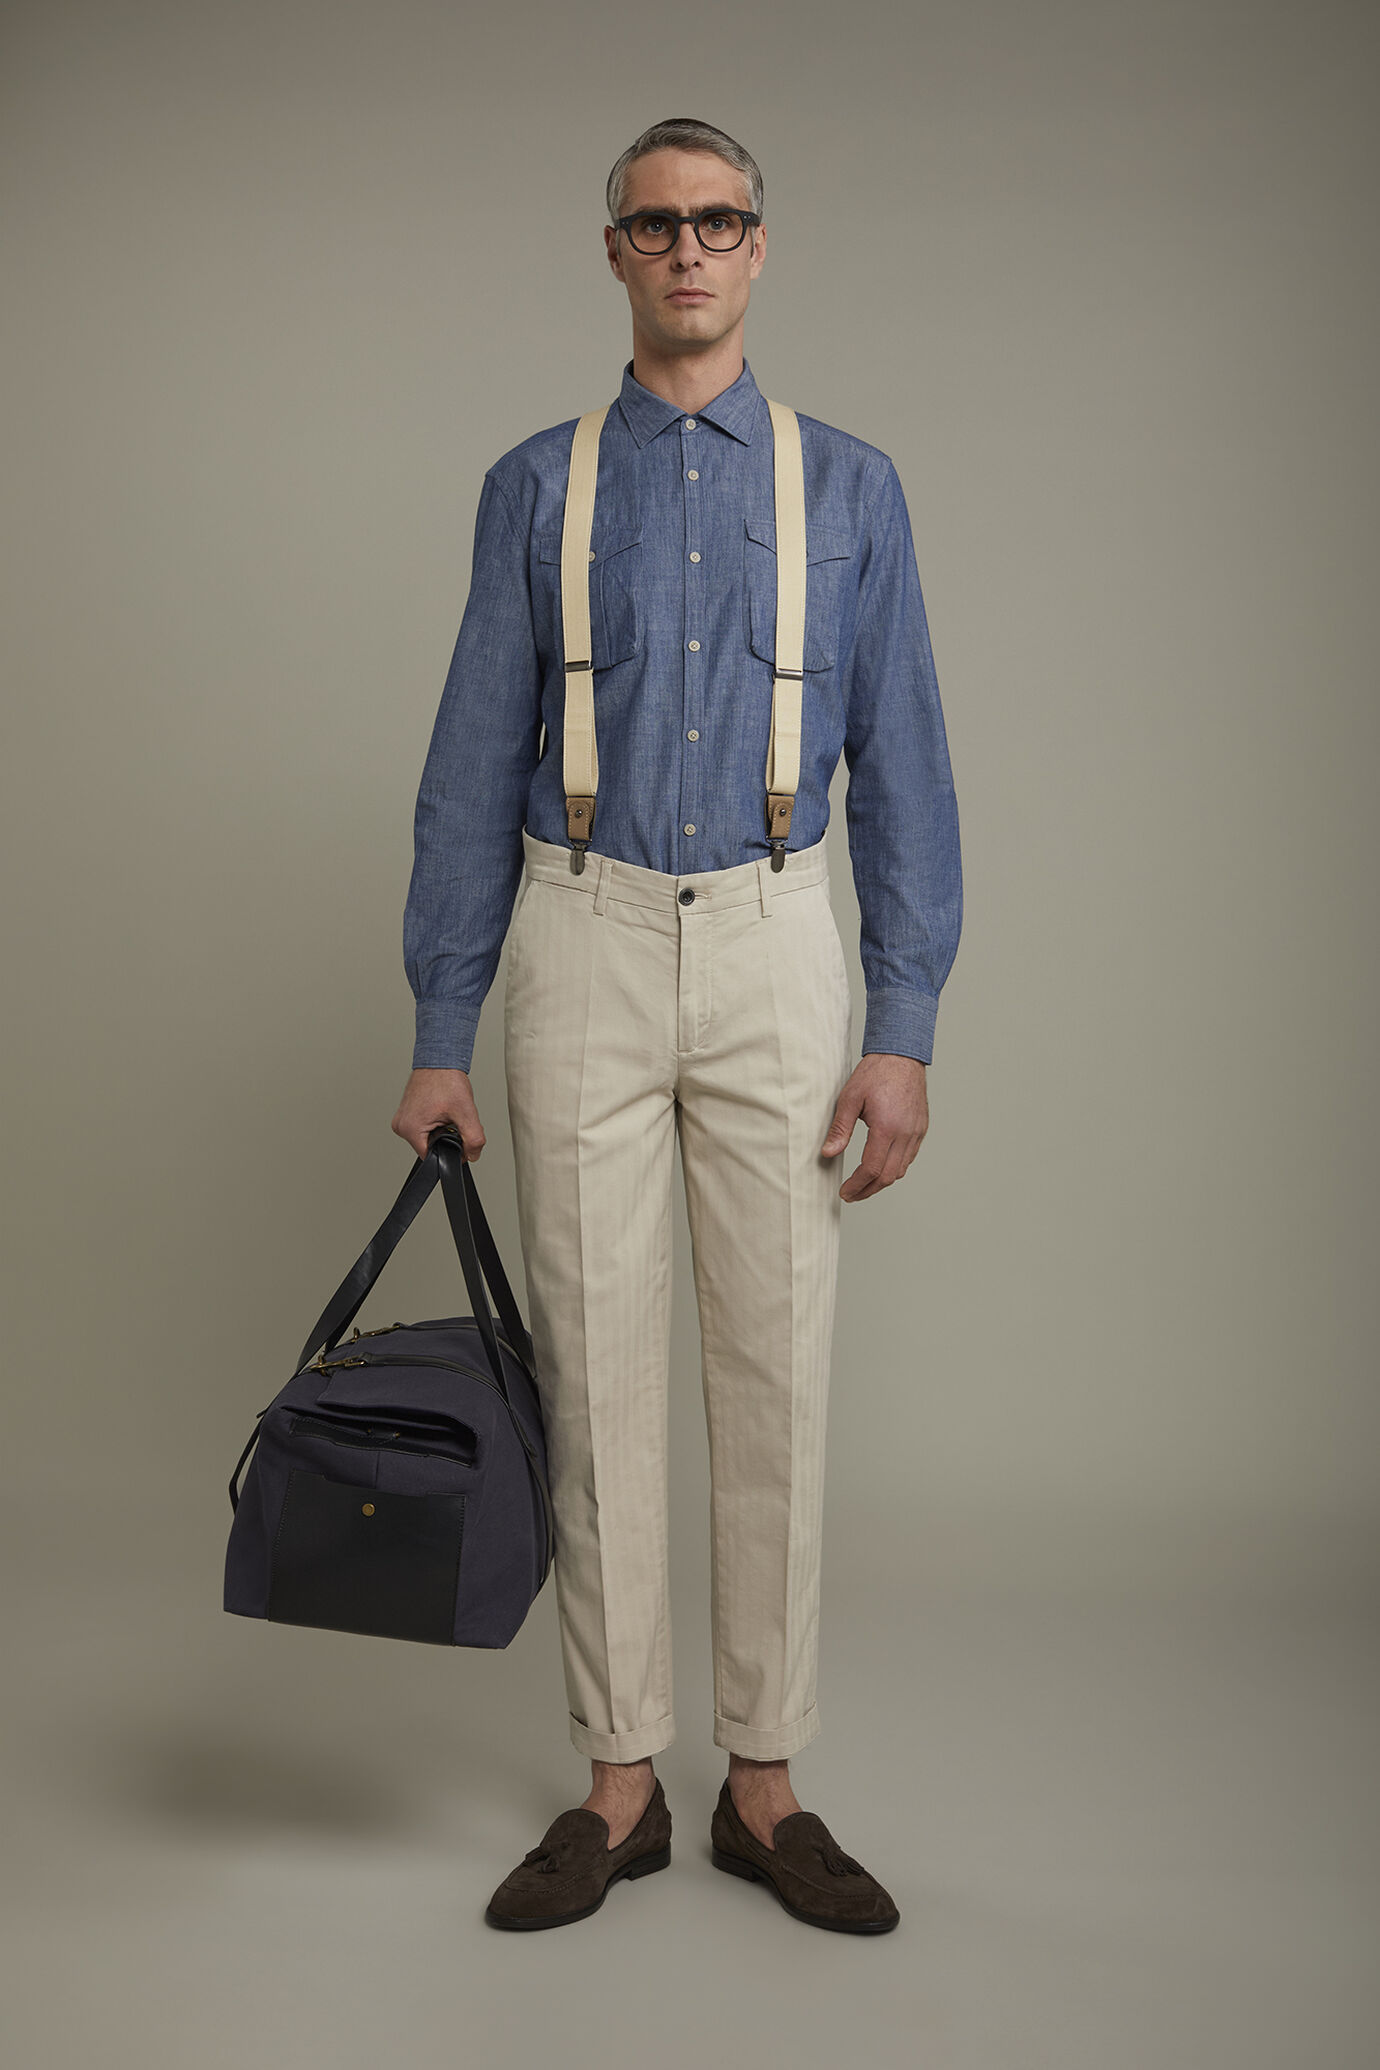 Men’s casual shirt classic collar 100% cotton denim fabric comfort fit